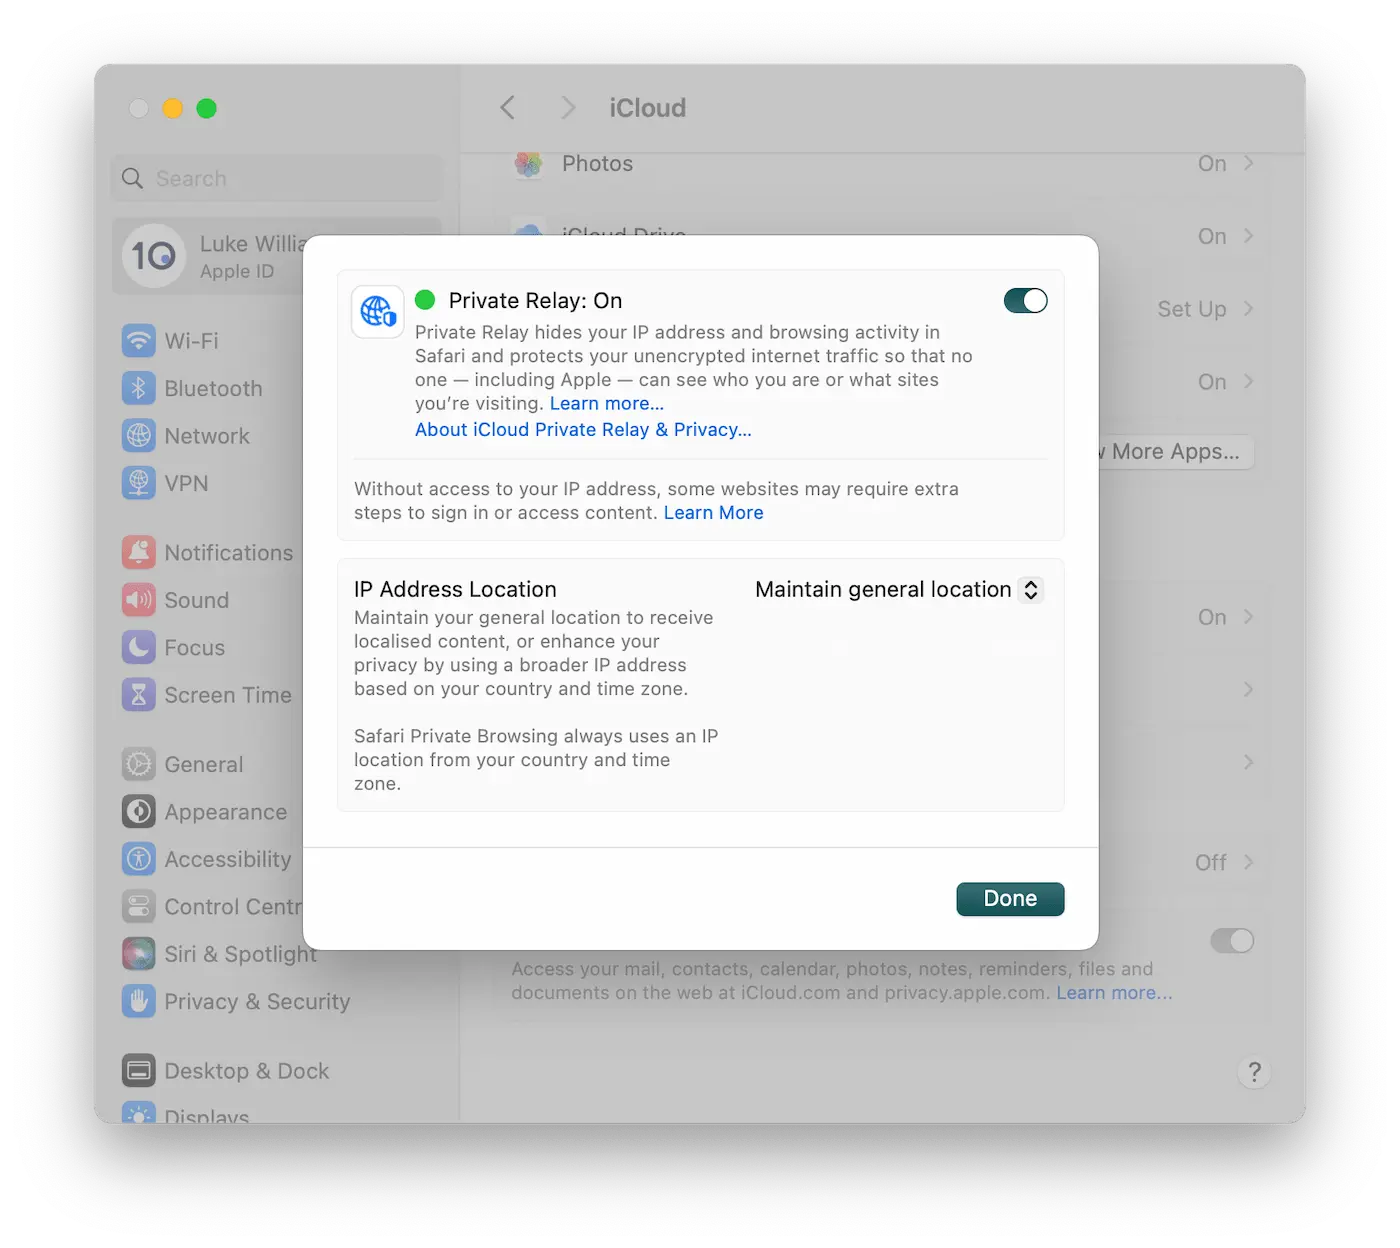 iCloud Private Relay settings screen on macOS